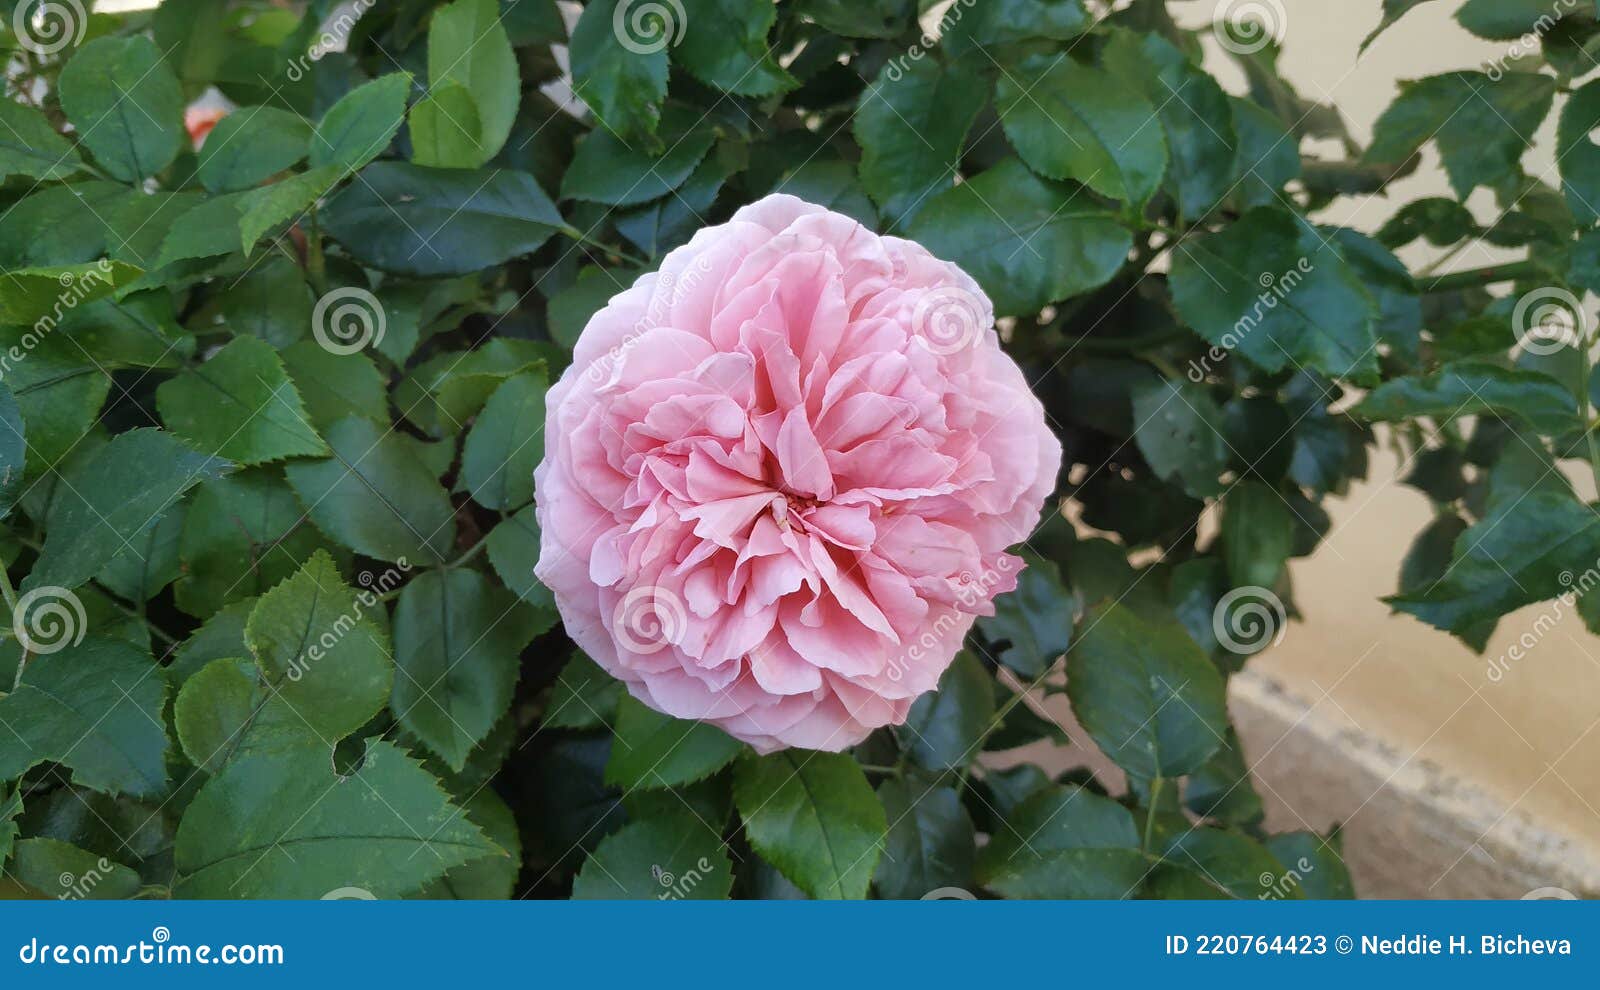 Blooming English Peony Rose Shrub In The Garden On A Sunny Day Olivia David Austin Stock Image Image Of Celebration Gift